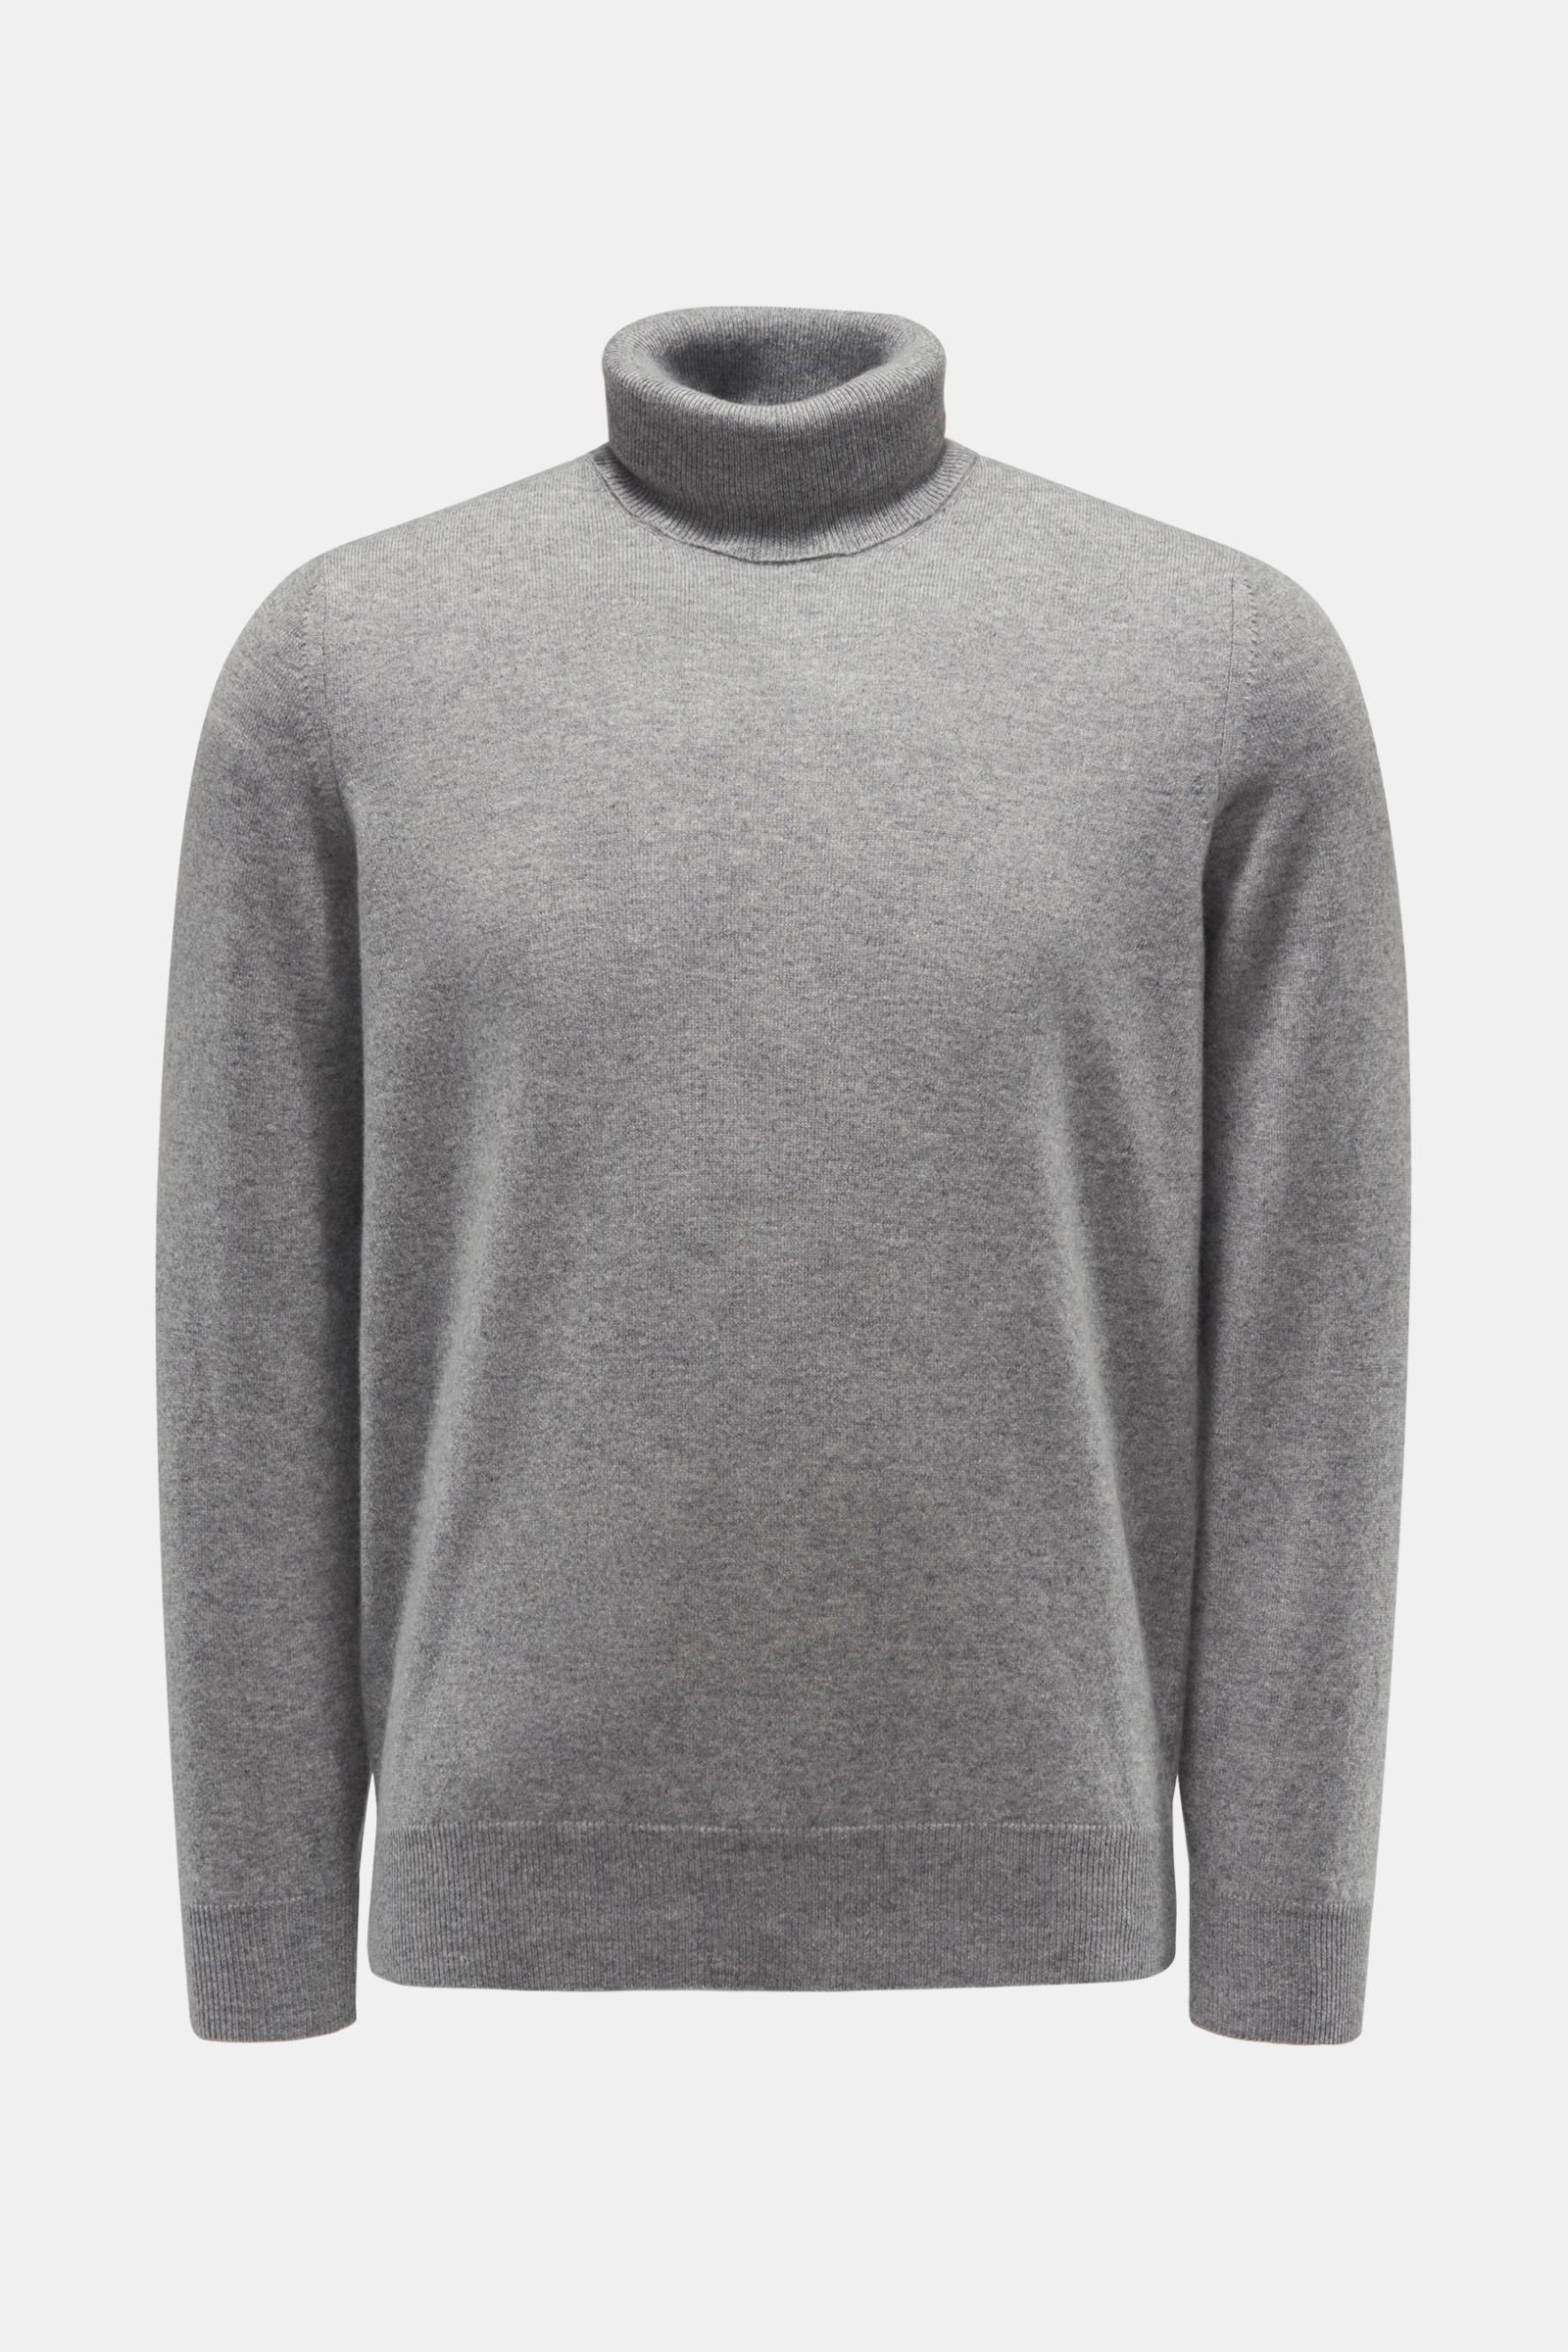 Cashmere Turtleneck Sweater in Grey - Brunello Cucinelli